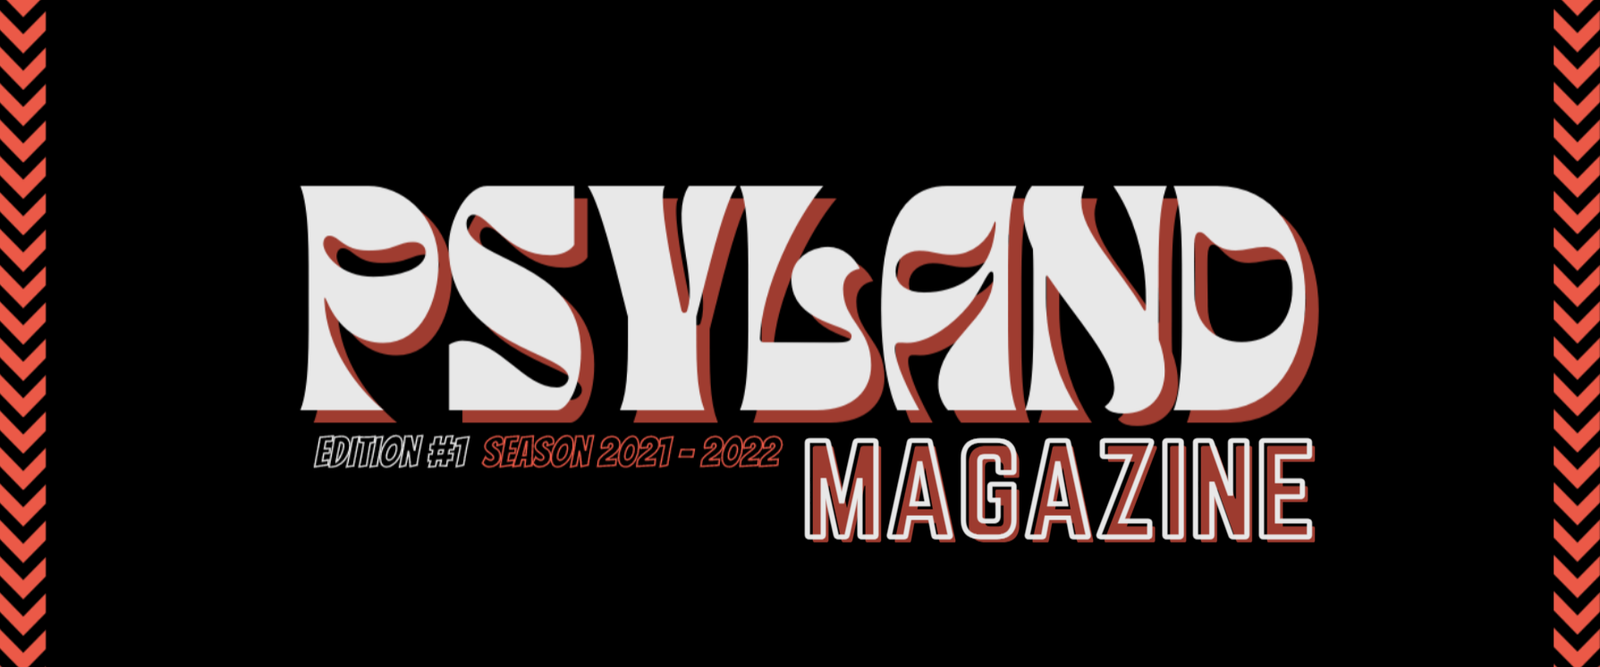 Psyland Magazine - Coming Soon